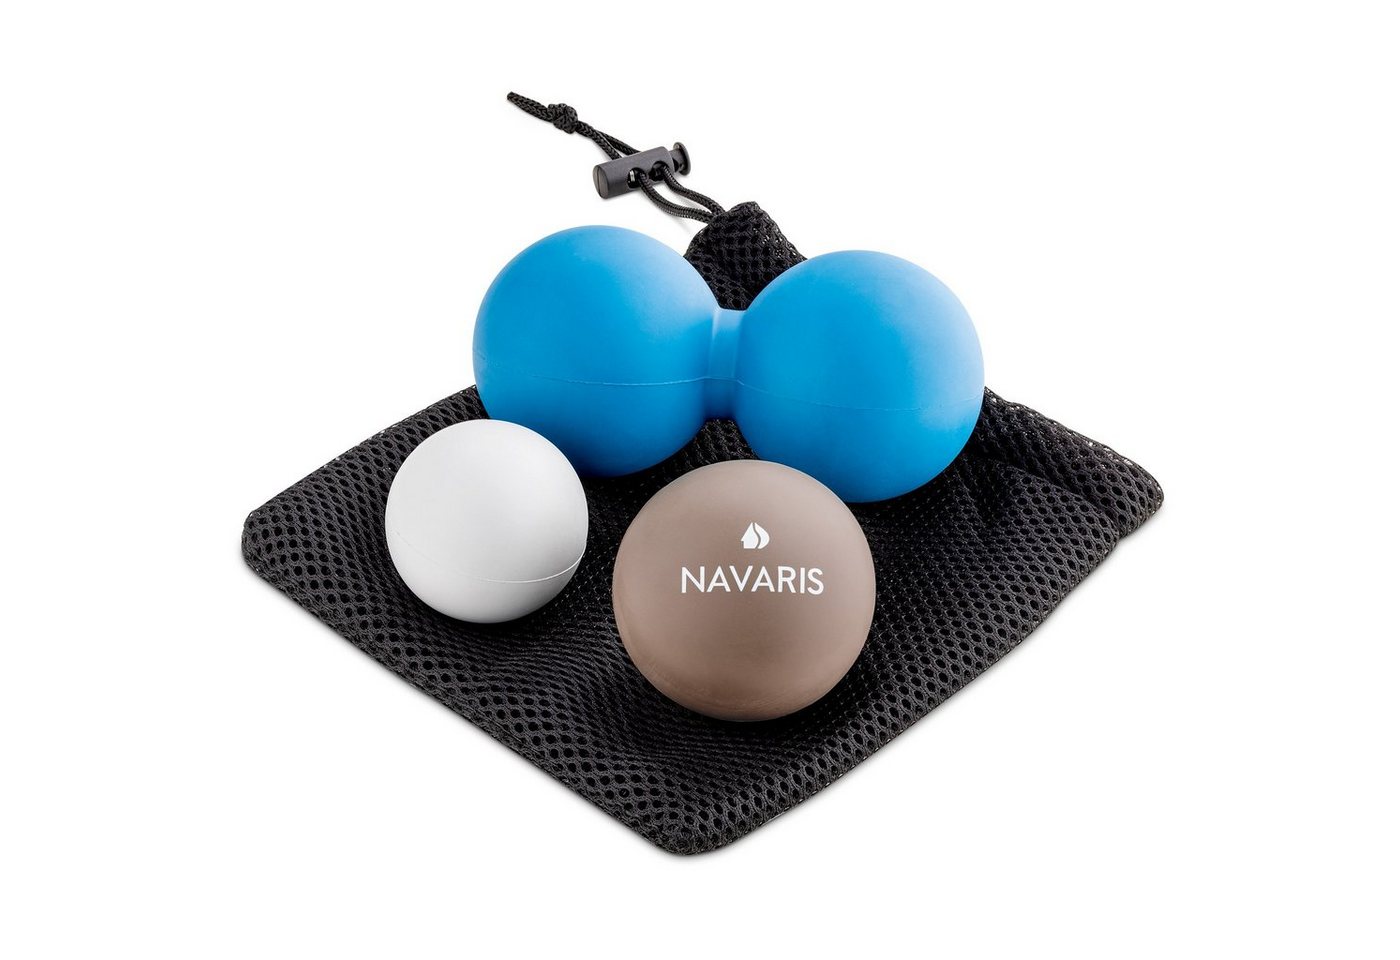 Navaris Stoffball Set - 2x Lacrosse Ball 1x Duoball - Peanut Duo Ball Faszienball von Navaris